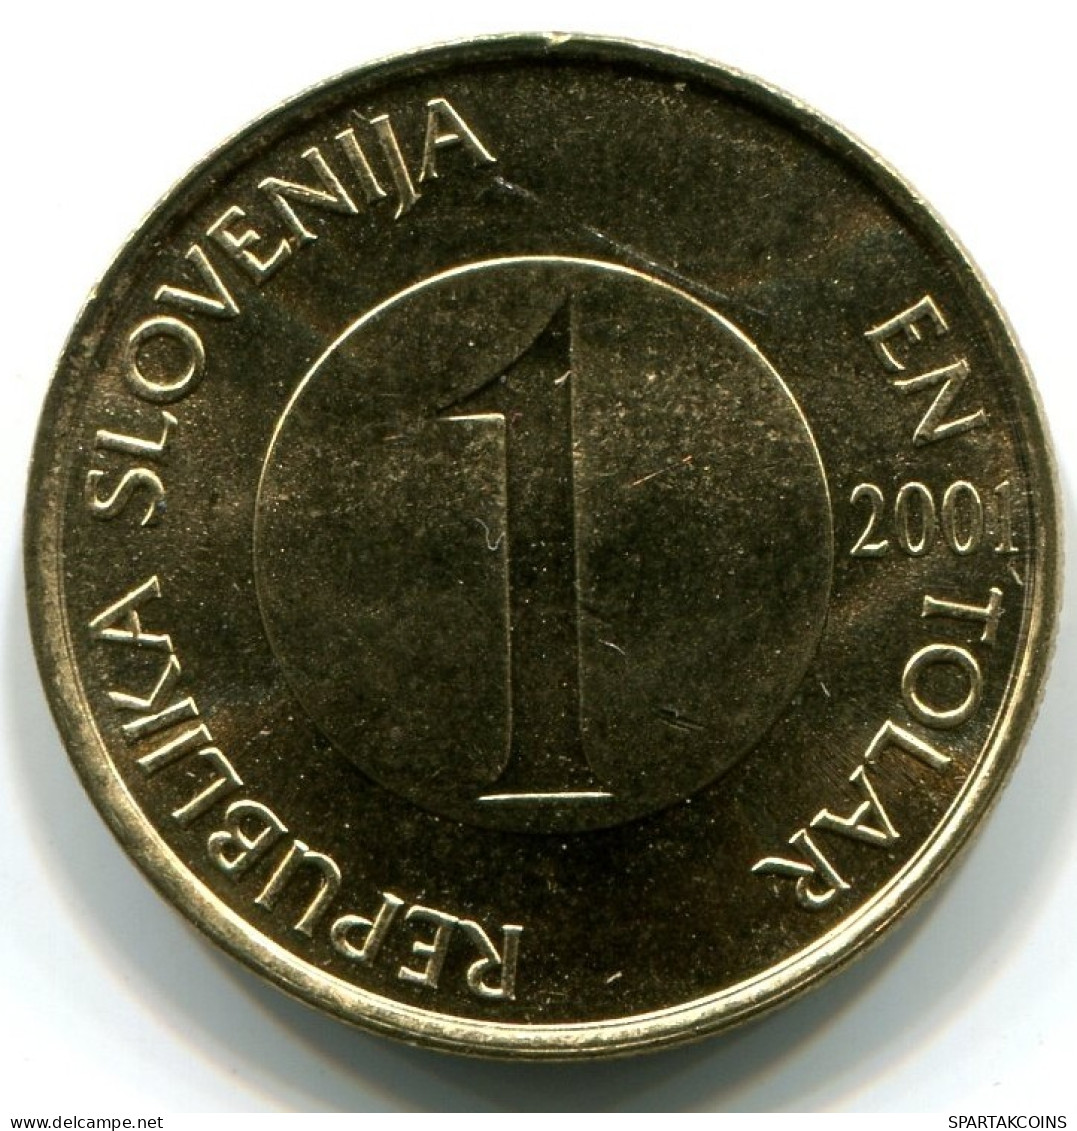 1 TOLAR 2001 SLOVENIA UNC Fish Coin #W11302.U.A - Eslovenia